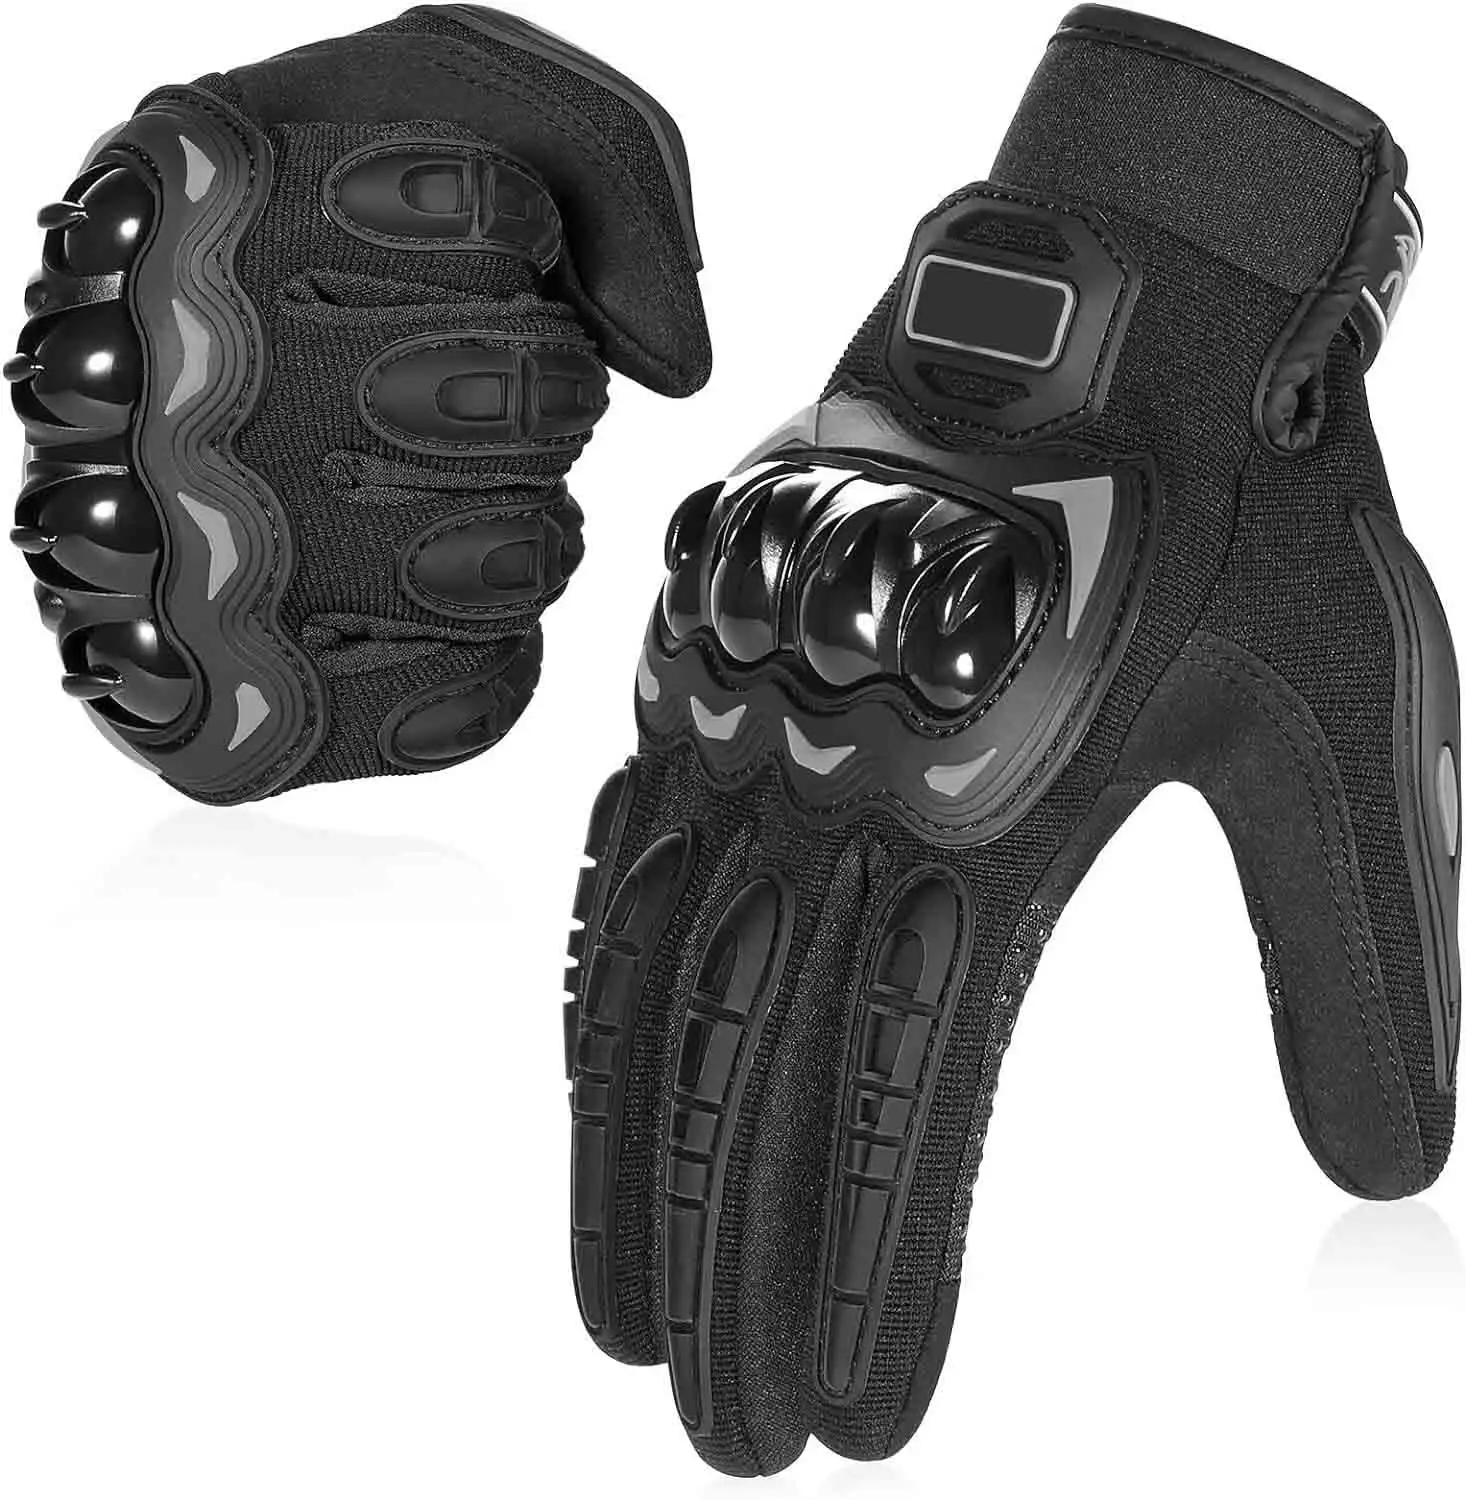 Mountainbike-Handschuhe für Herren Damen Motorrad-Radrennhandschuhe mit 5 MM SBR Pad-Touchscreen Knöchelschutz Motocross-Handschuhe